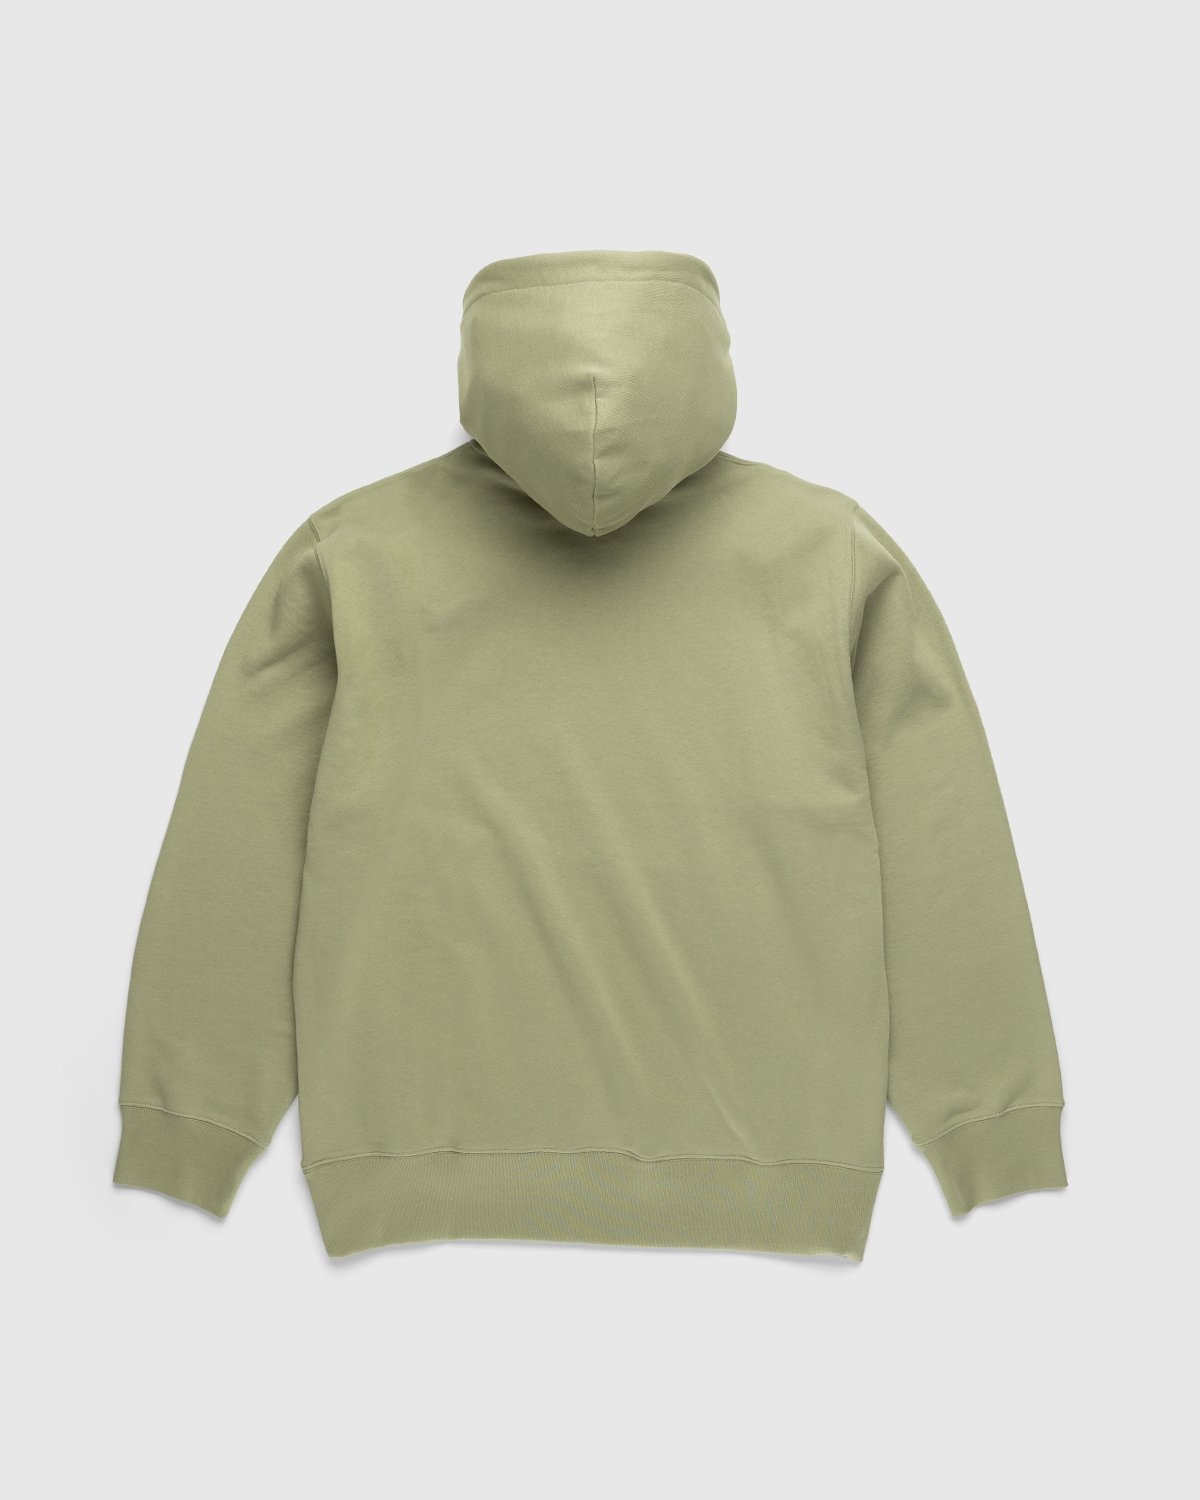 Acne Studios – Organic Cotton Hooded Sweatshirt Eucalyptus Green - Hoodies - Green - Image 2